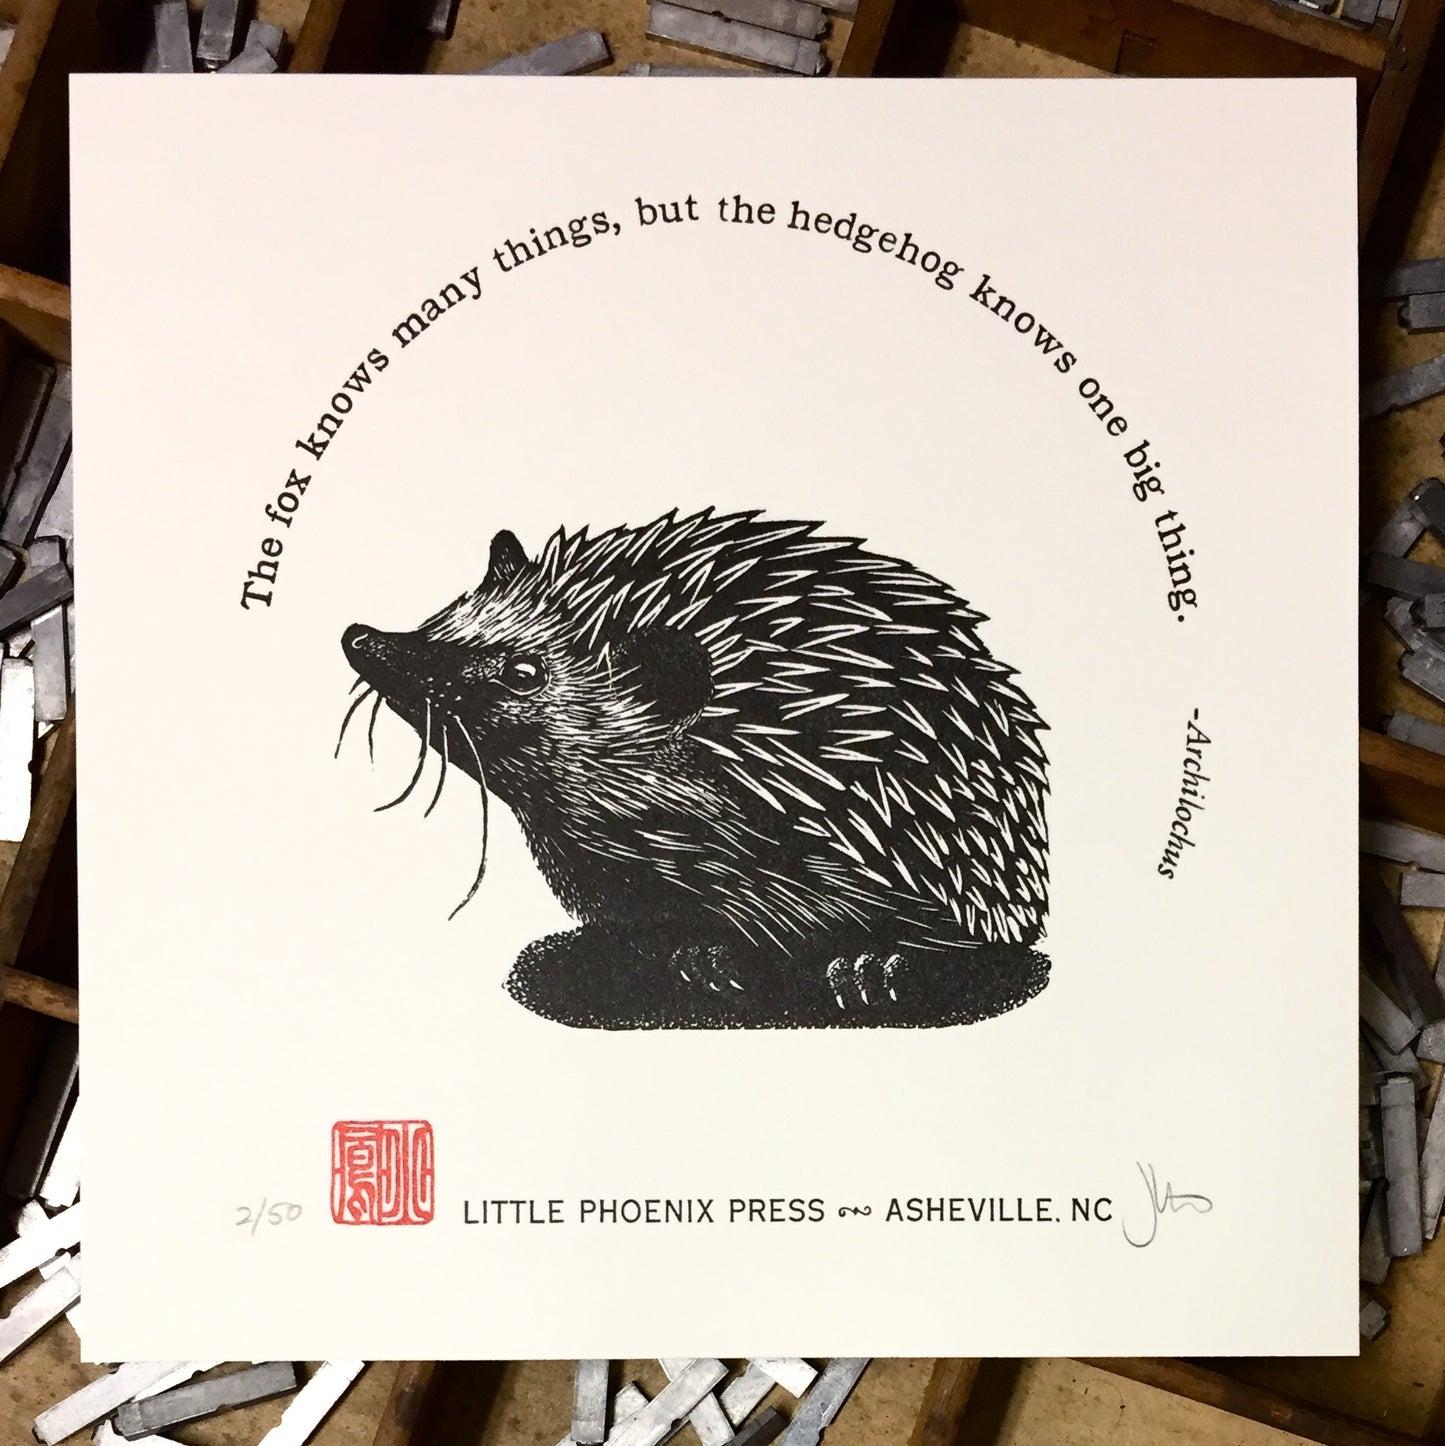 Hedgehog Knows